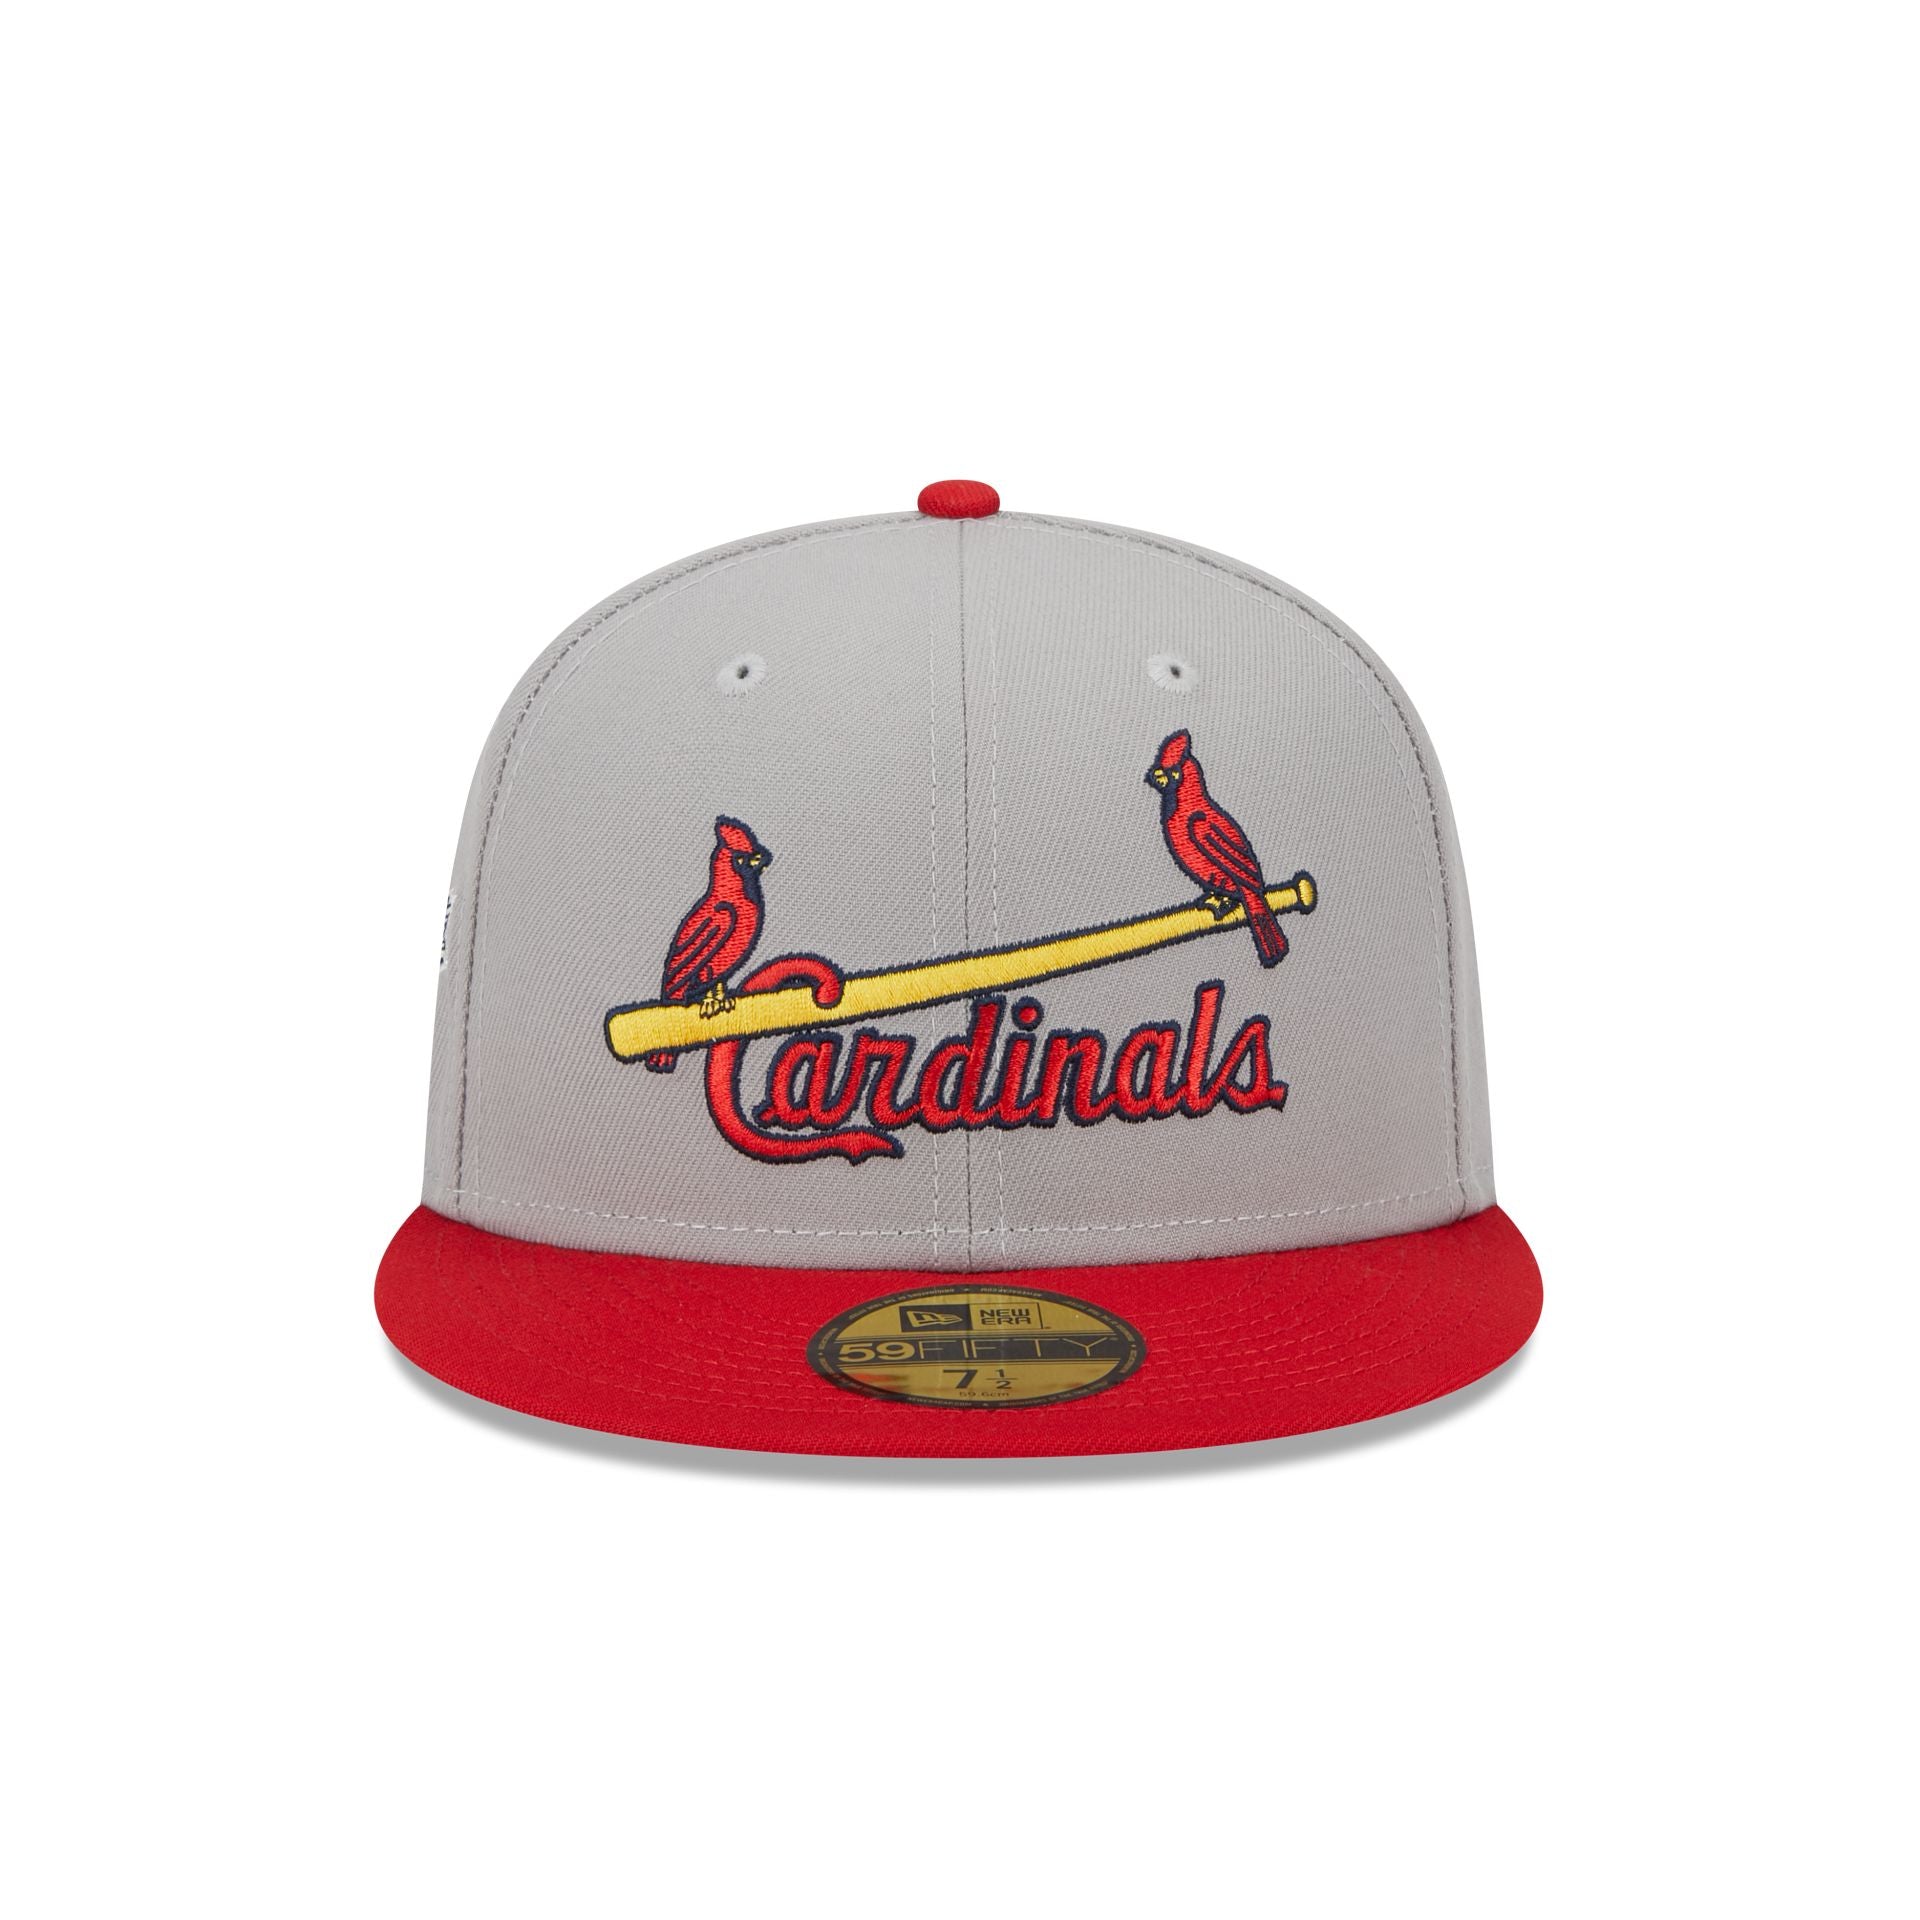 Vintage St. Louis Cardinals New Era Fitted Hat Cap Size 7 3/4 